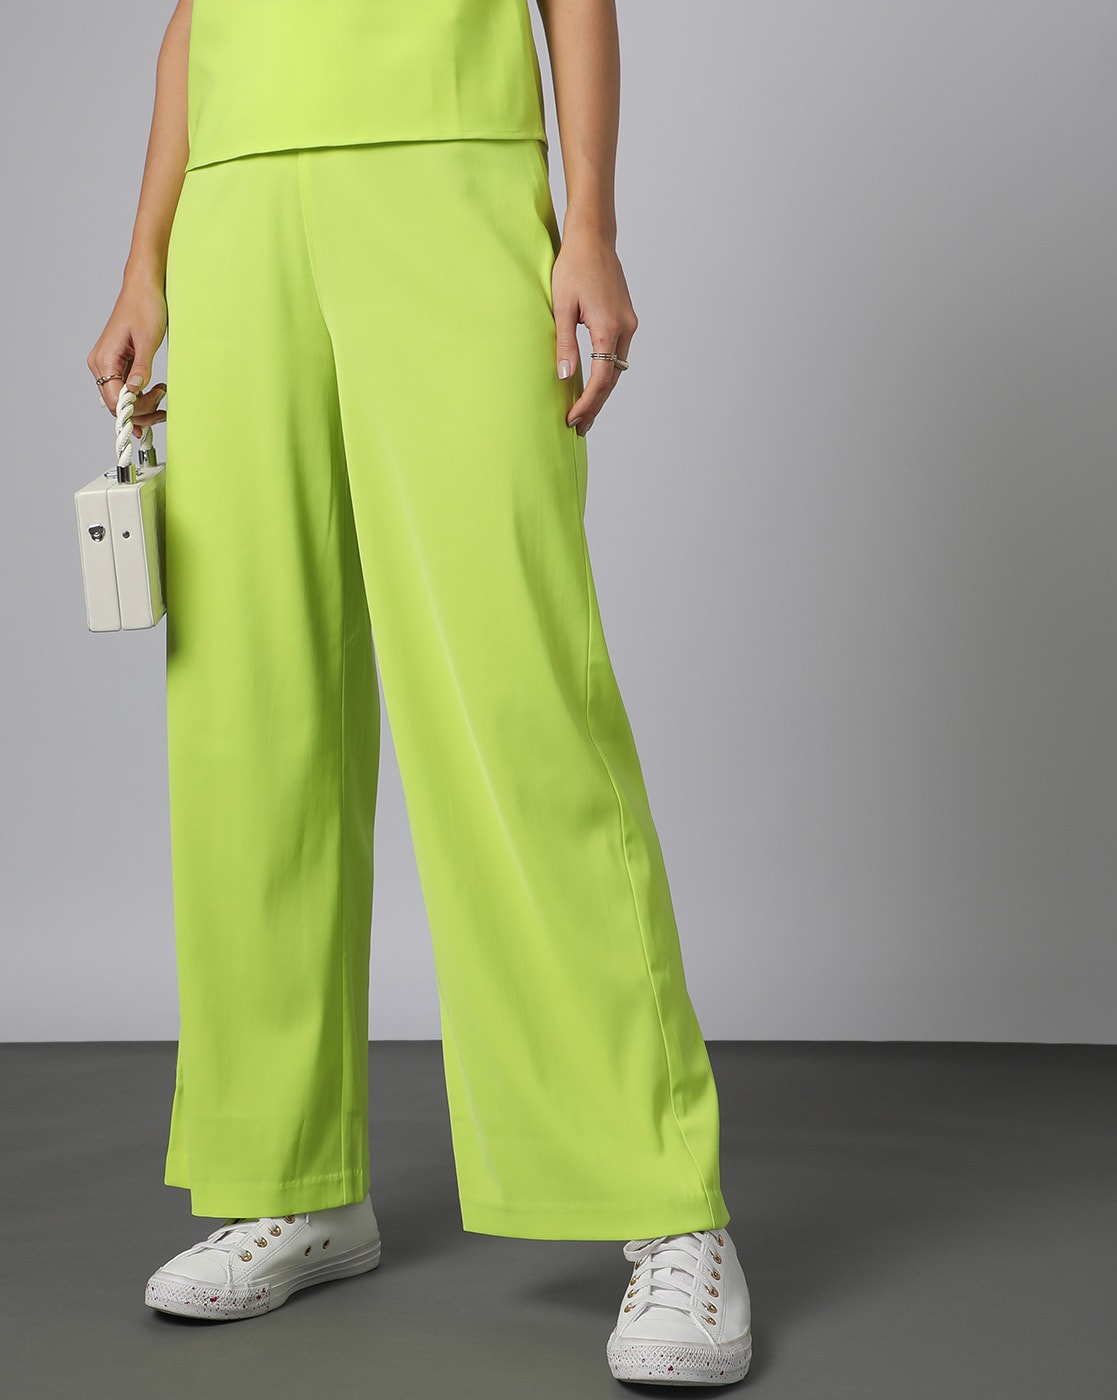 Lime Green Slim Fit Pants - Flat Front Suitsforme.com